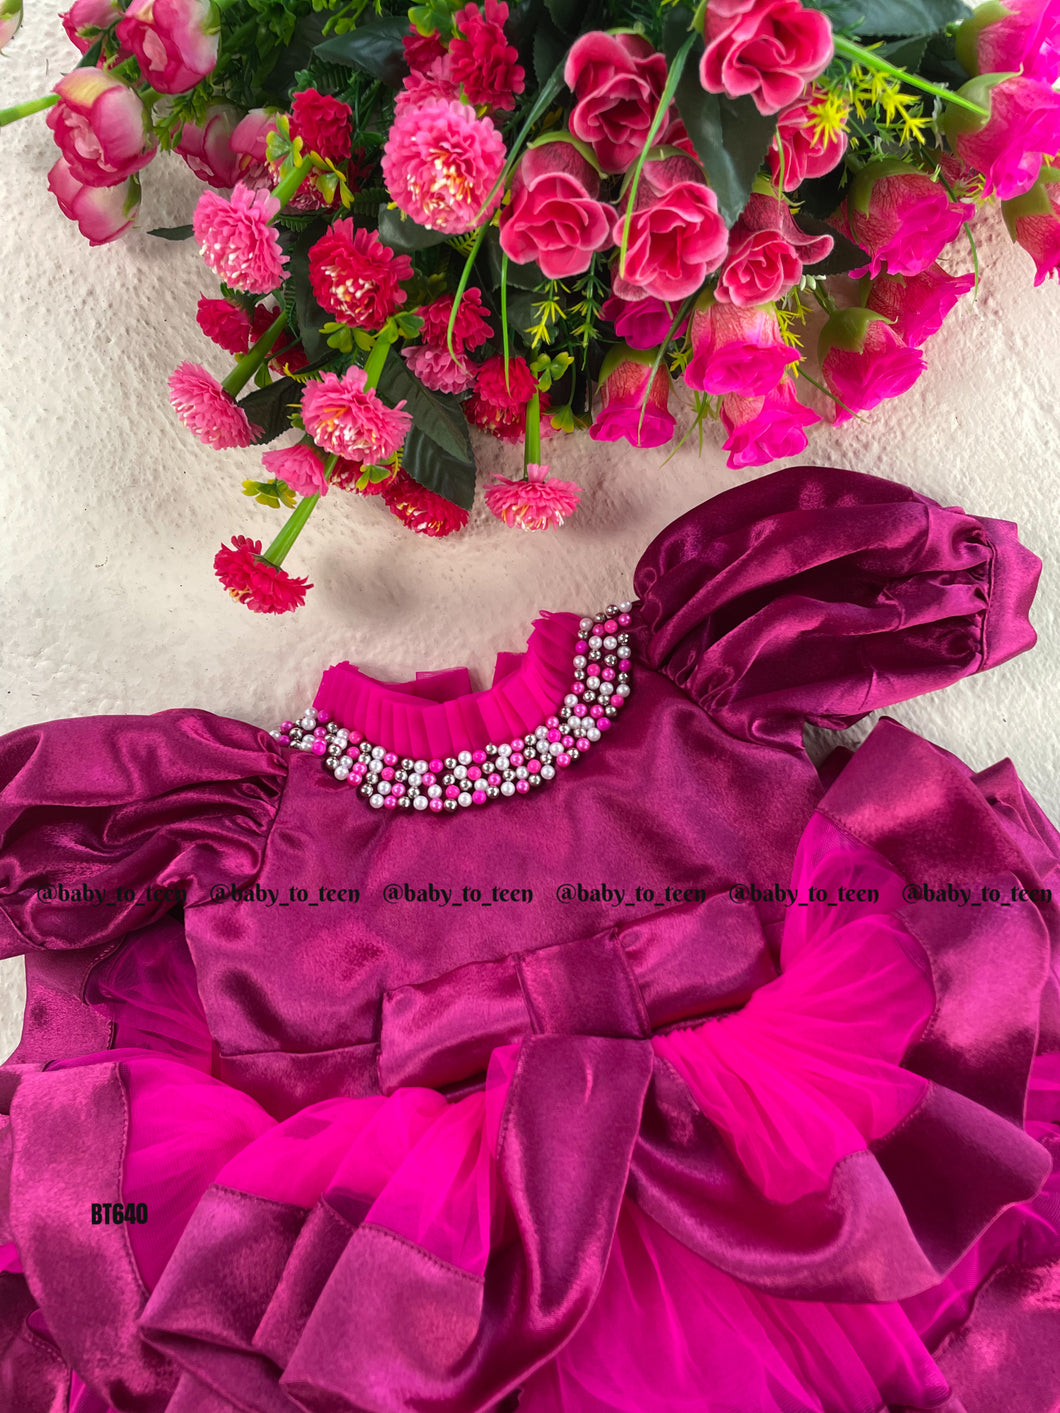 BT640 Fuchsia Fantasy Ruffle Dress – Glamour in Every Layer